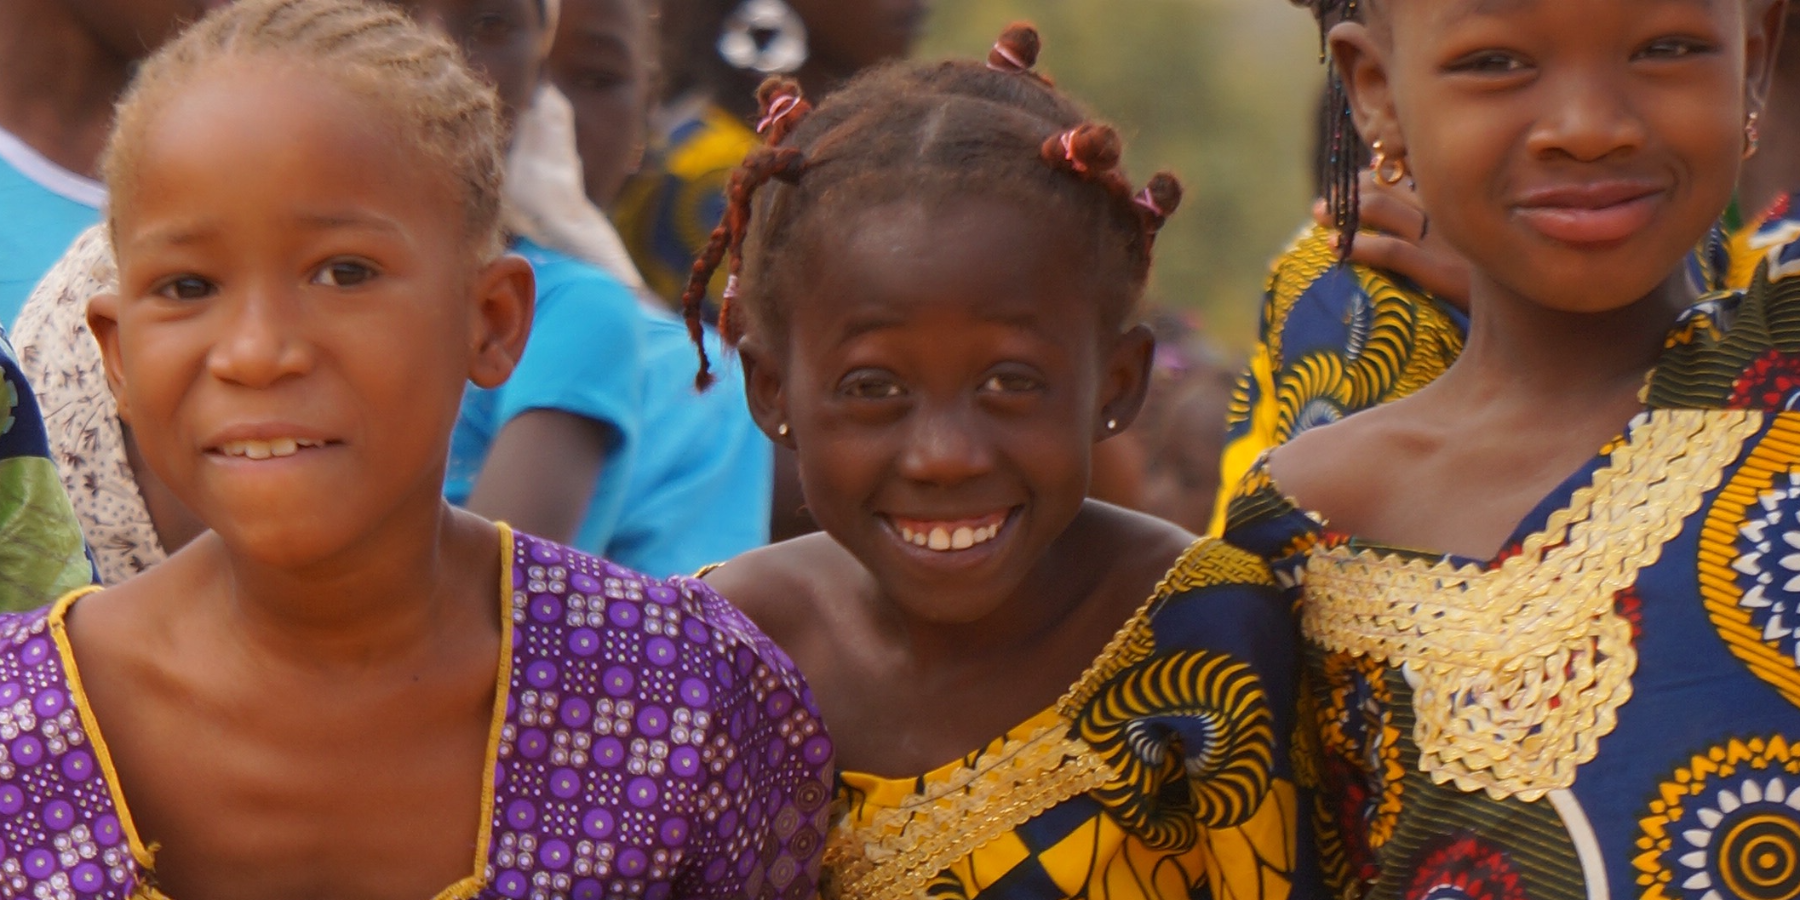 Mali Rising Foundation